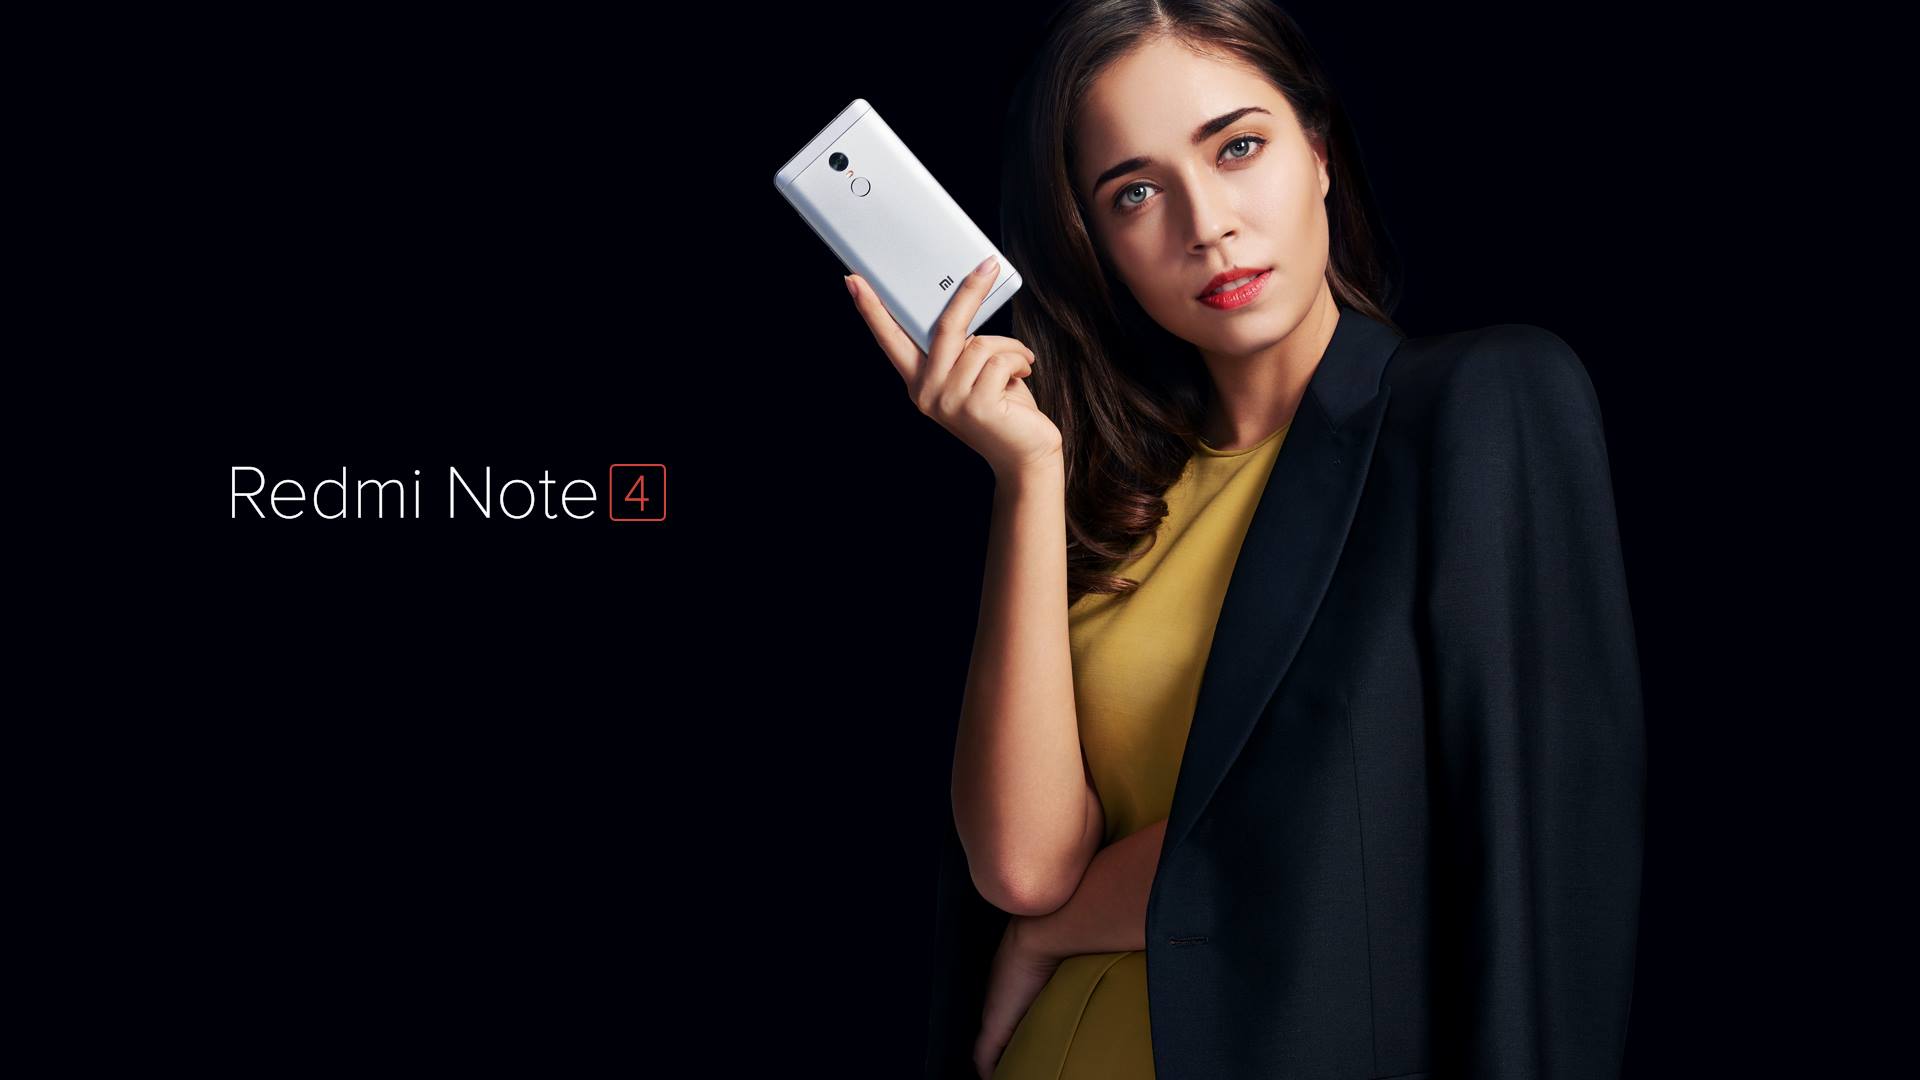 Xiaomi реклама на весь экран. Реклама смартфона. Девушка со смартфоном. Реклама редми. Модели смартфонов.